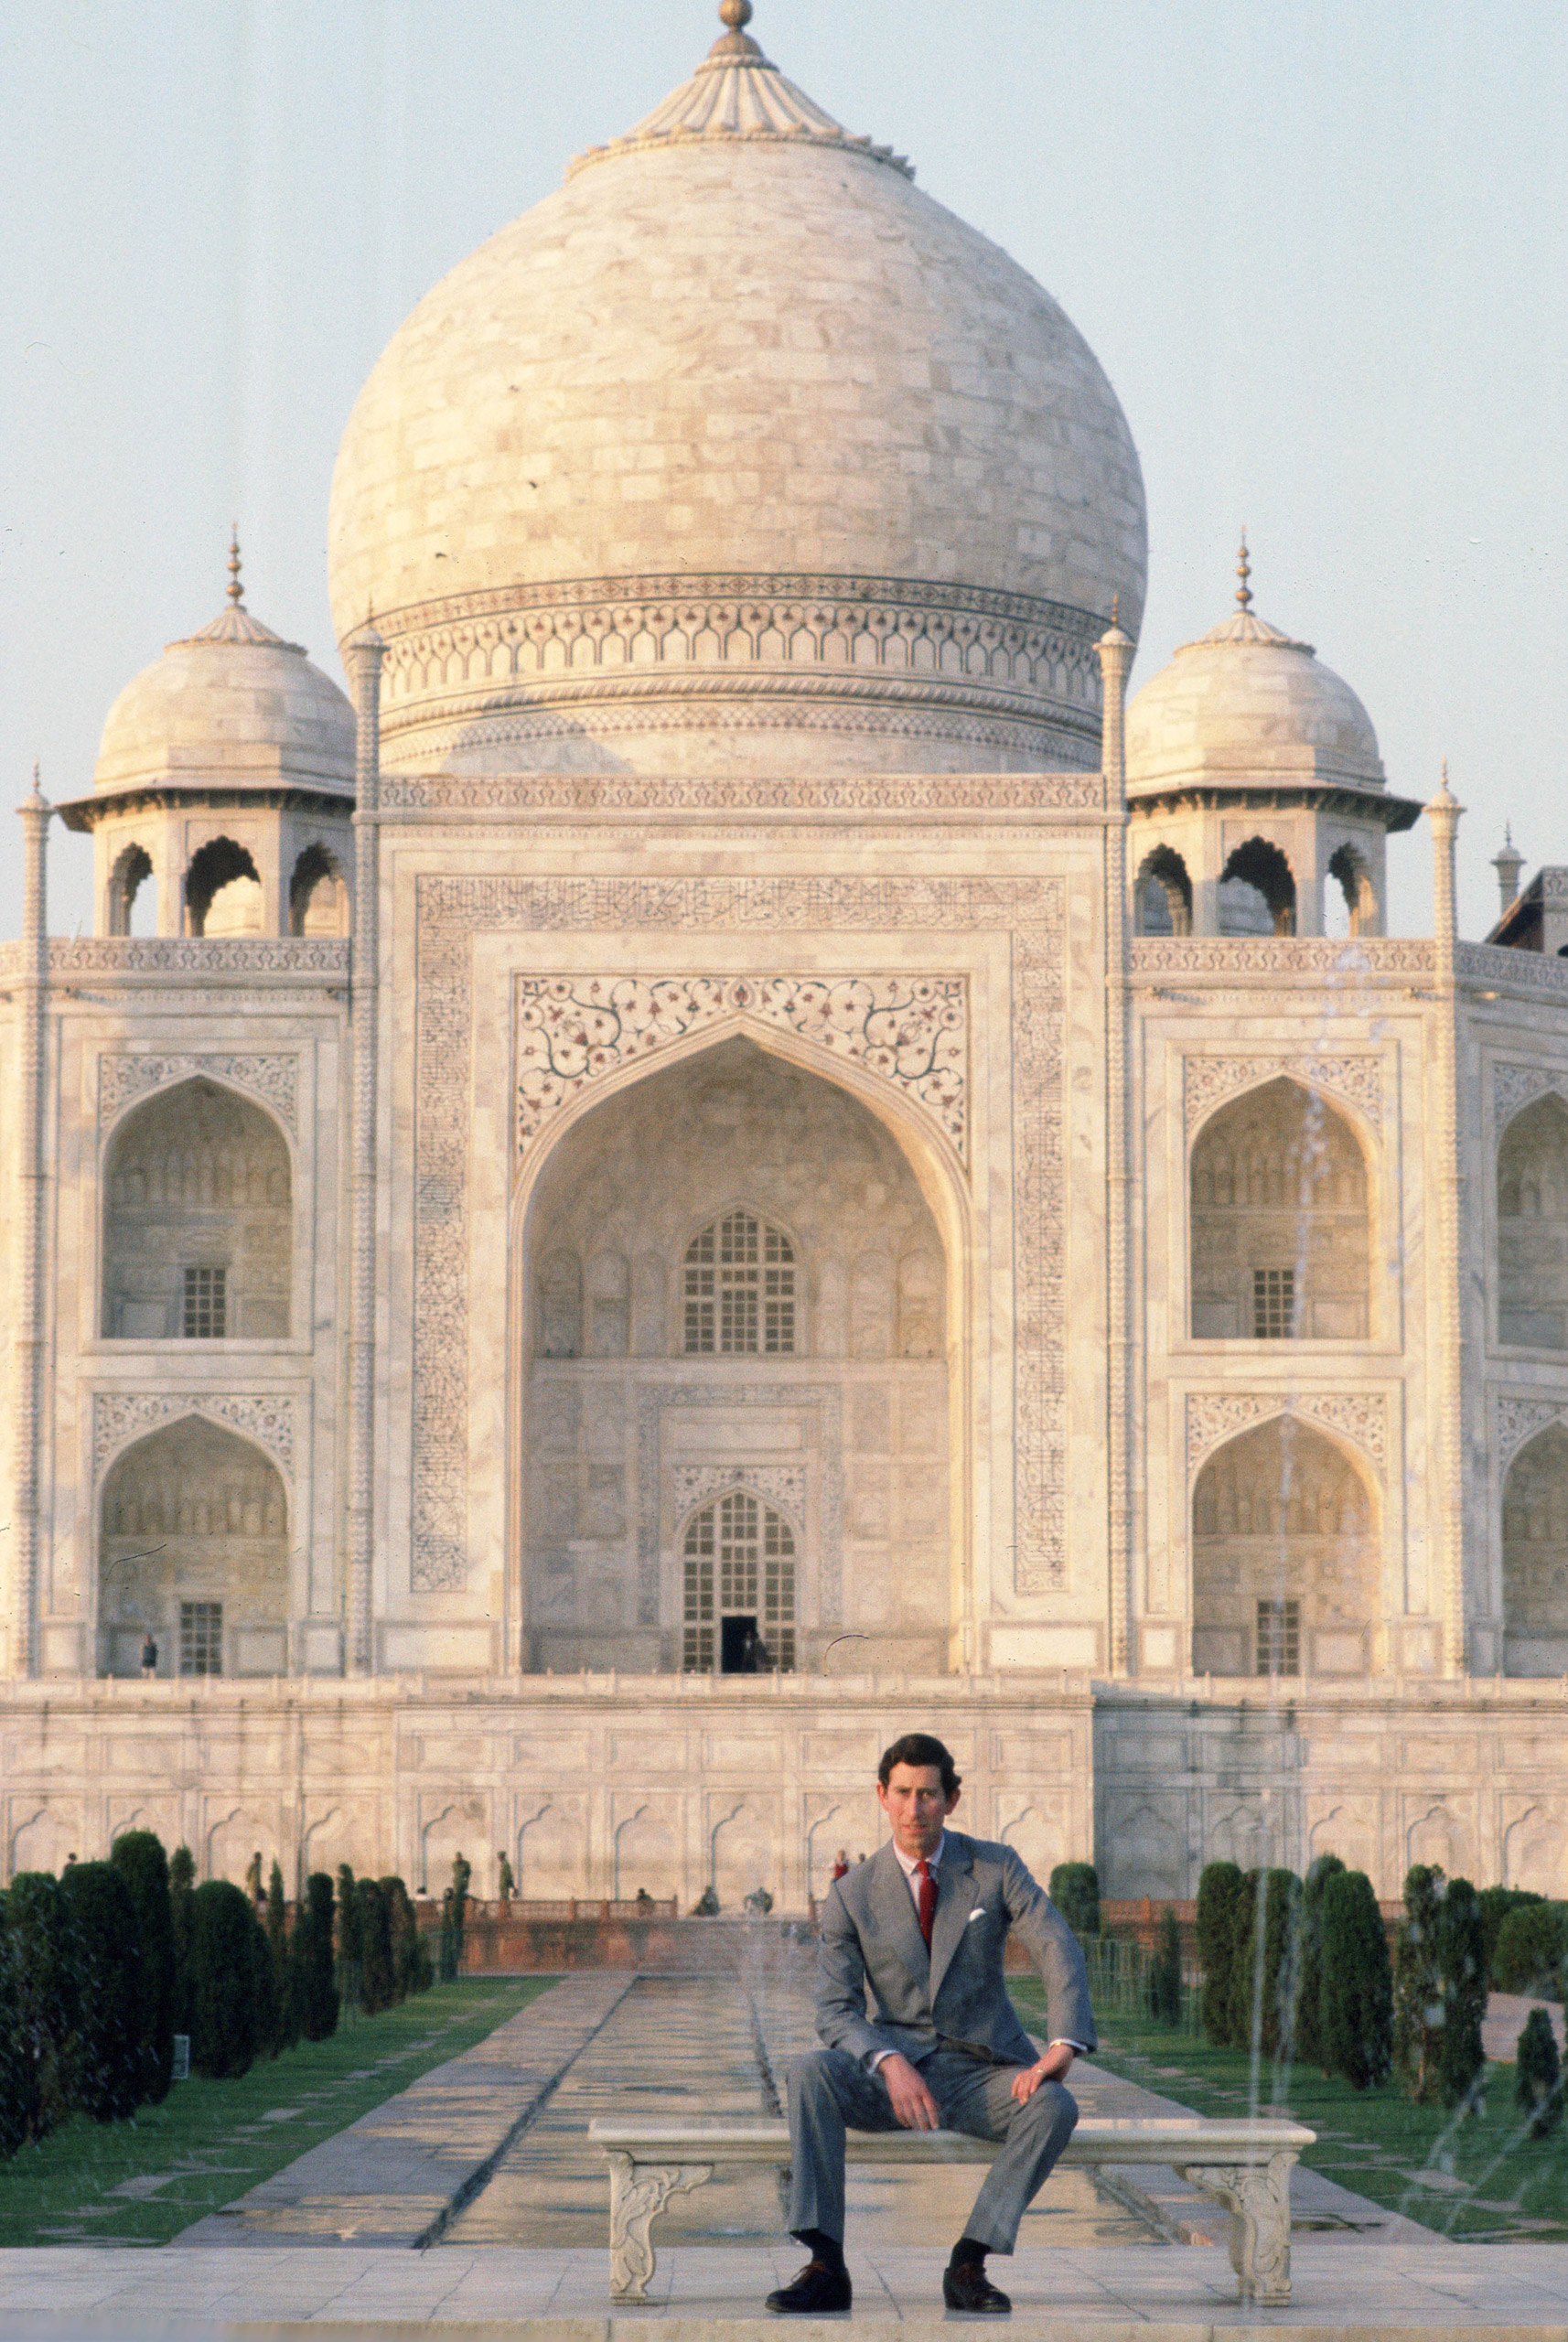 Prince Charles, Prince of Wales visits the Taj Mahal in India, Nov. 28, 1980.